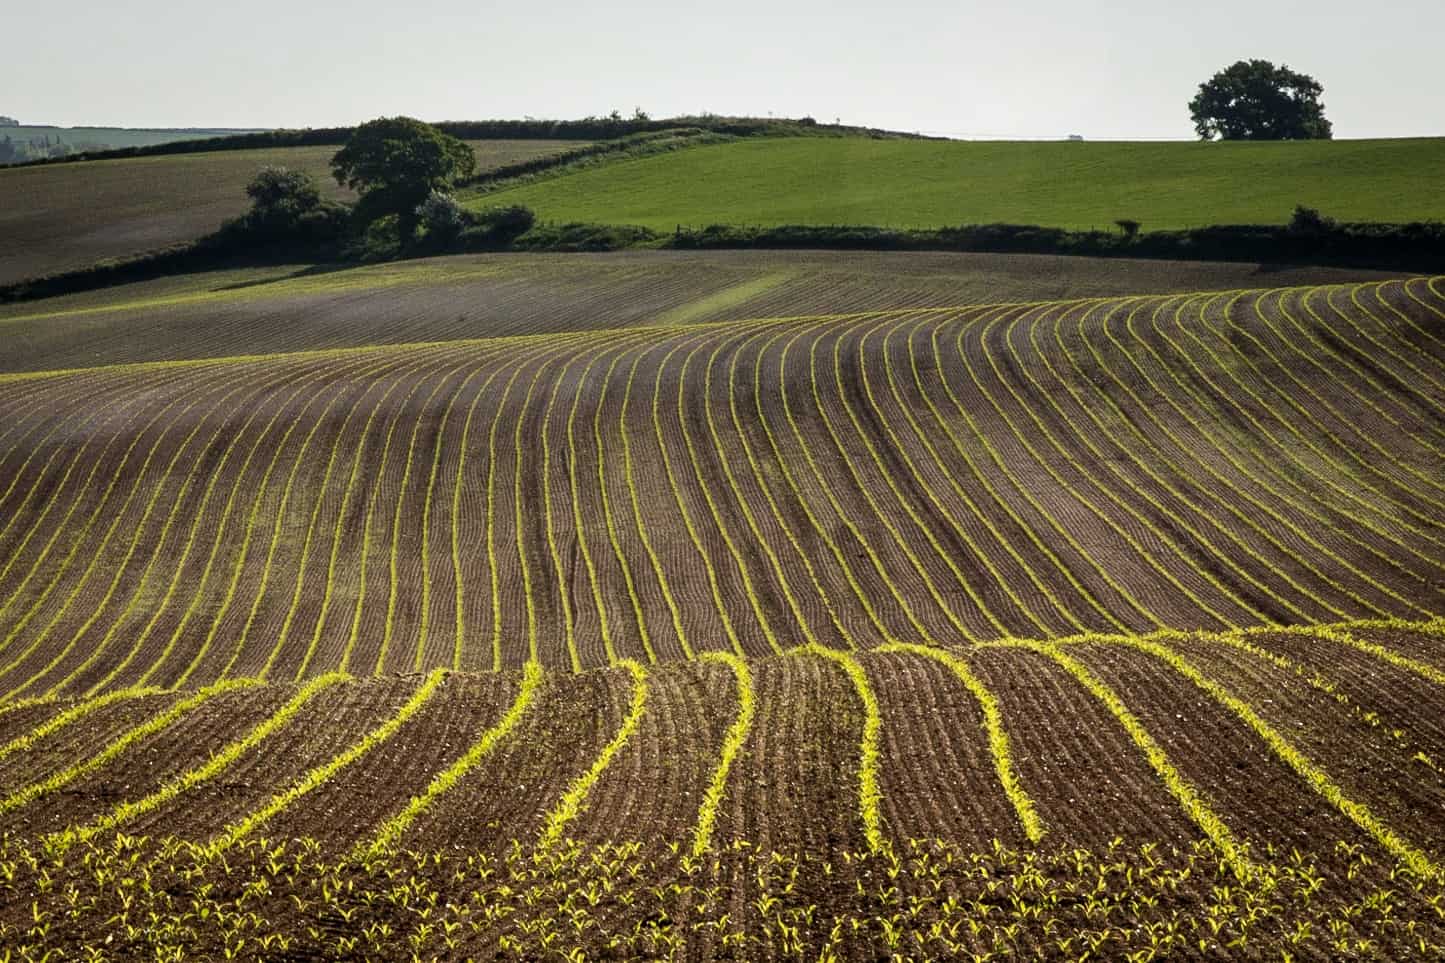  Field by Dorset Photographer Rick McEvoy 